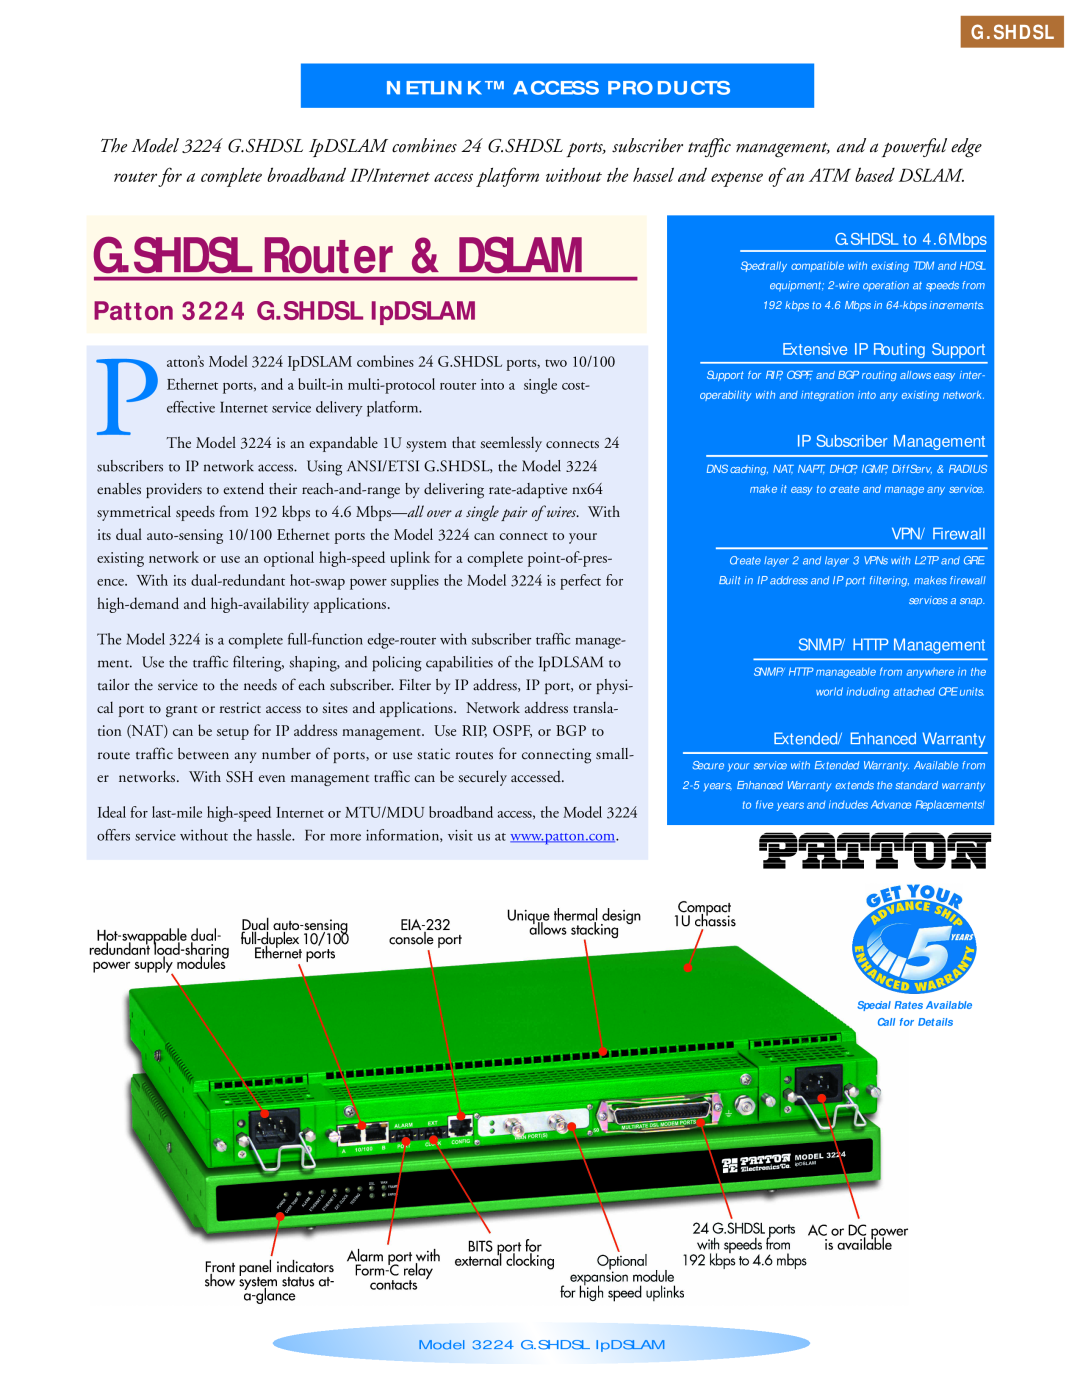 Patton electronic warranty G.Shdsl, G.SHDSL Router & DSLAM, Patton 3224 G.SHDSL IpDSLAM, G.SHDSL to 4.6Mbps 